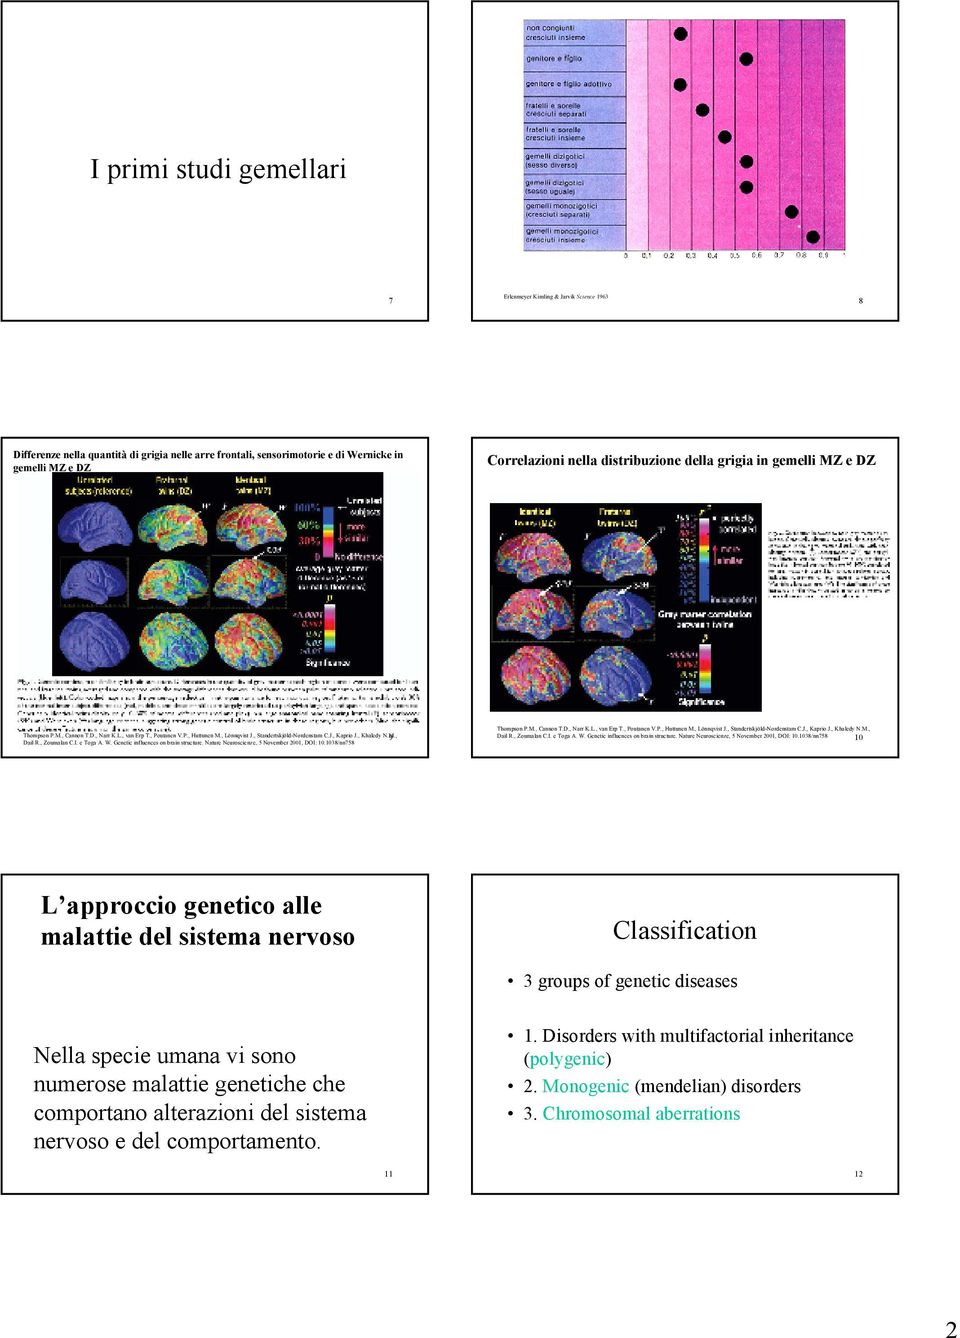 , Zoumalan C.I. e Toga A. W. Genetic influences on brain structure. Nature Neuroscienze, 5 November 2001, DOI: 10.1038/nn758 Thompson P.M., Cannon T.D., Narr K.L., van Erp T., Poutanen V.P., Huttunen M.